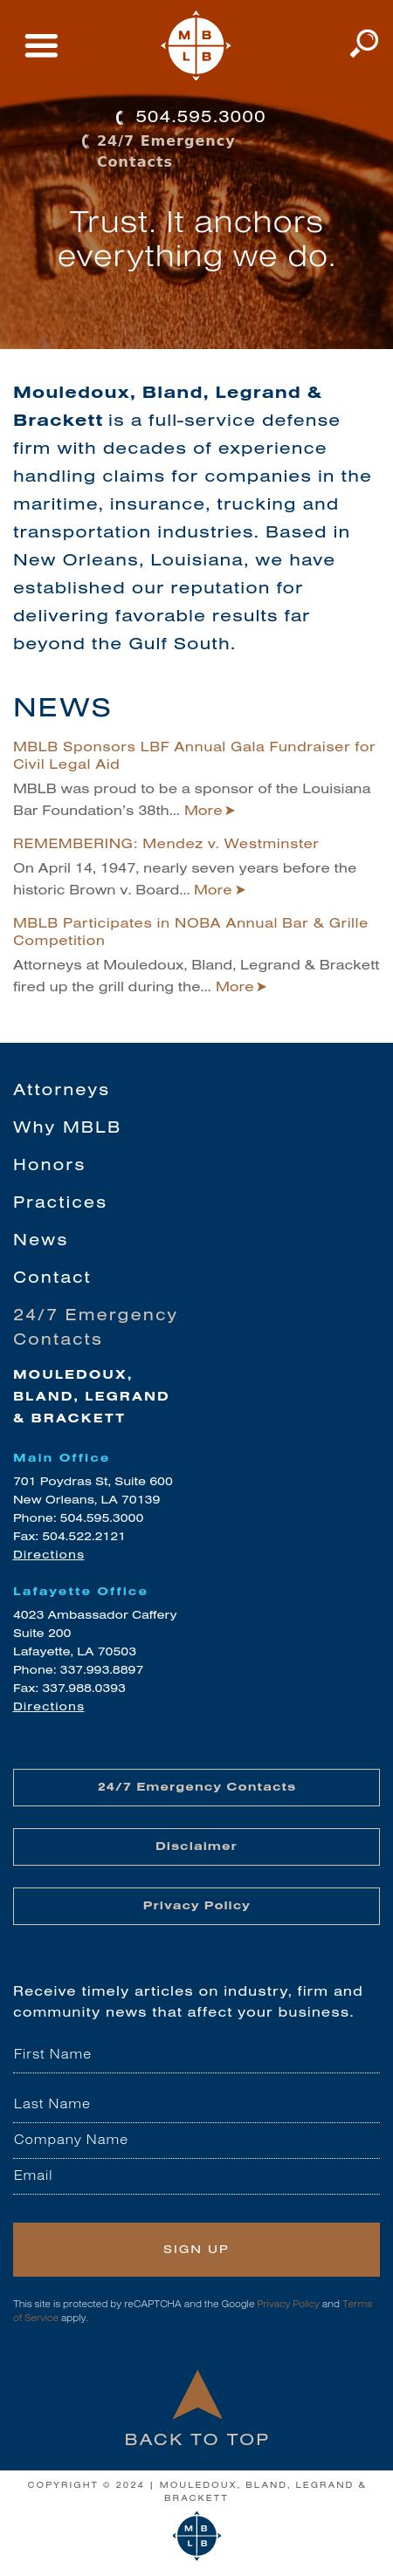 Mouledoux Bland Legrand & Brackett LLC - New Orleans LA Lawyers